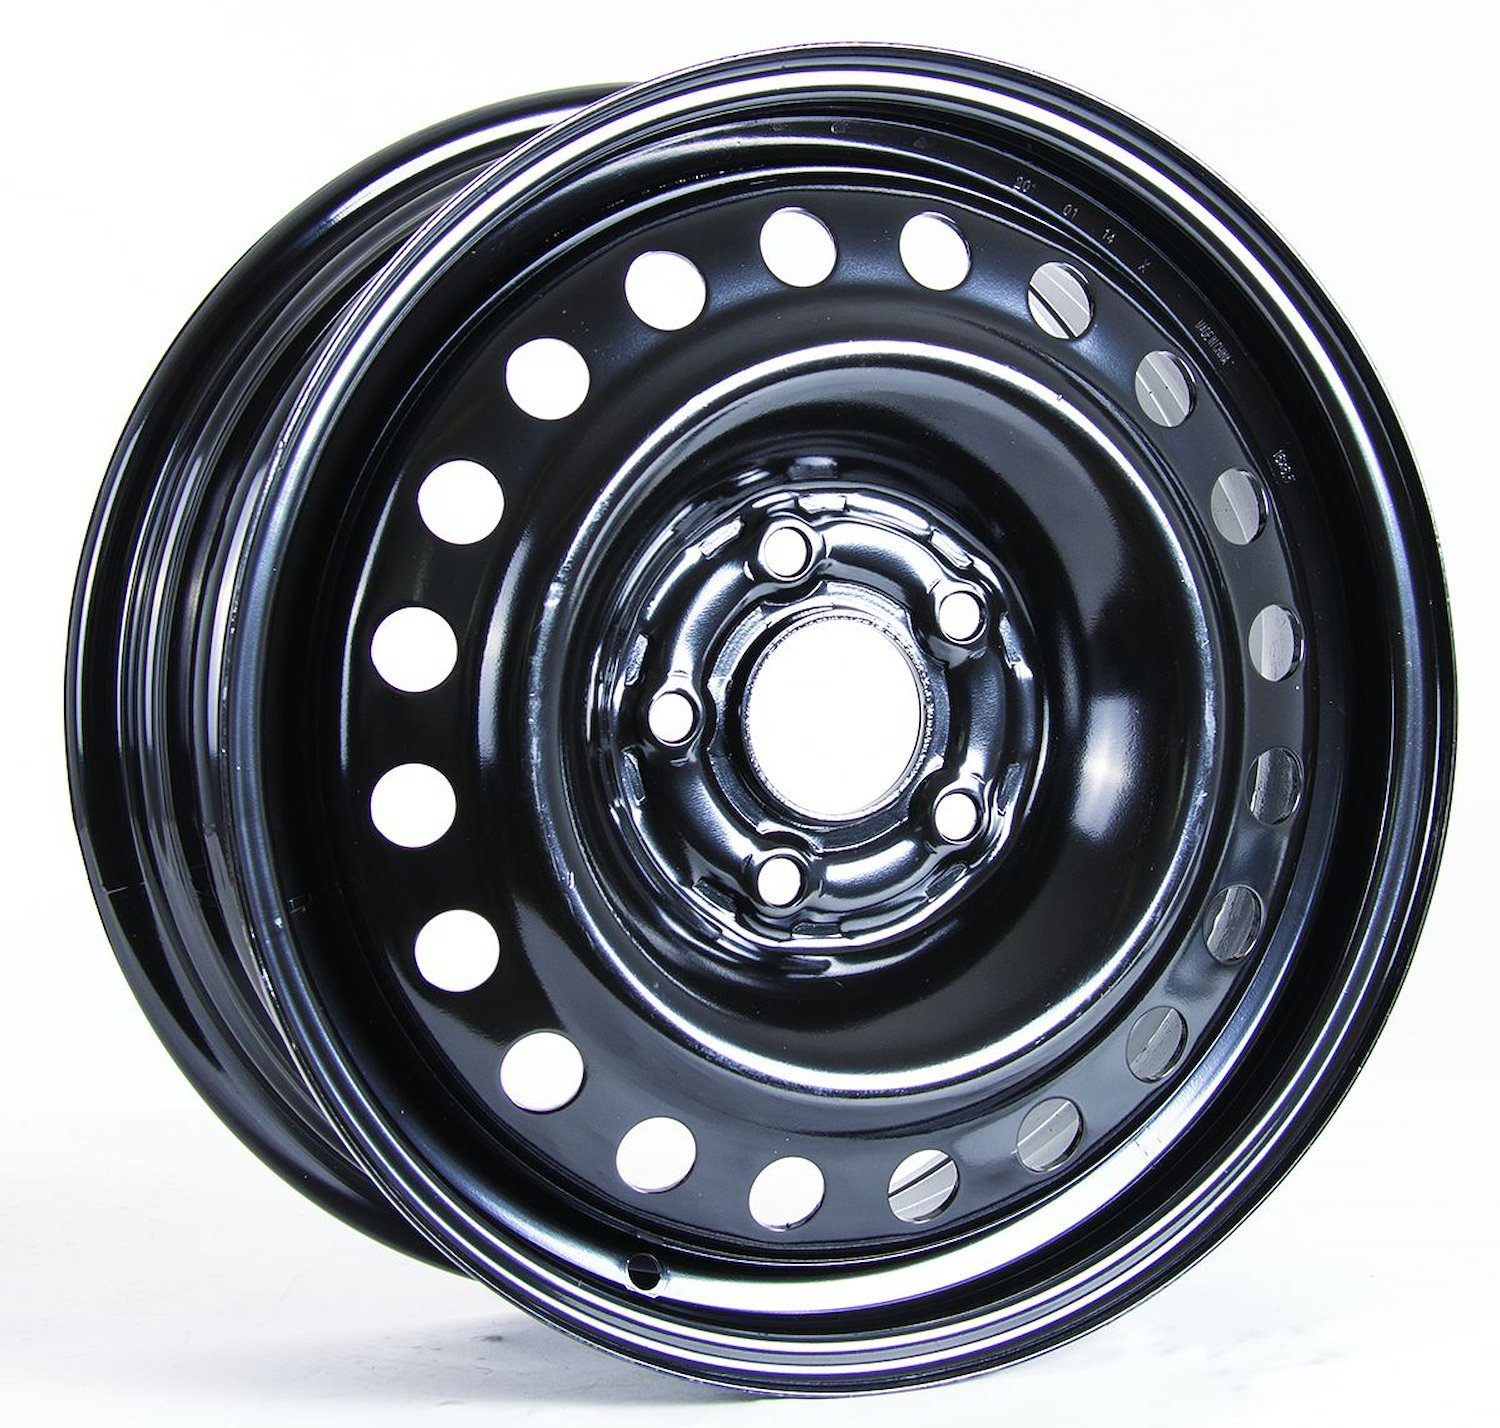 X99144N Steel Wheel [Size: 16" x 6.50"] Black Finish